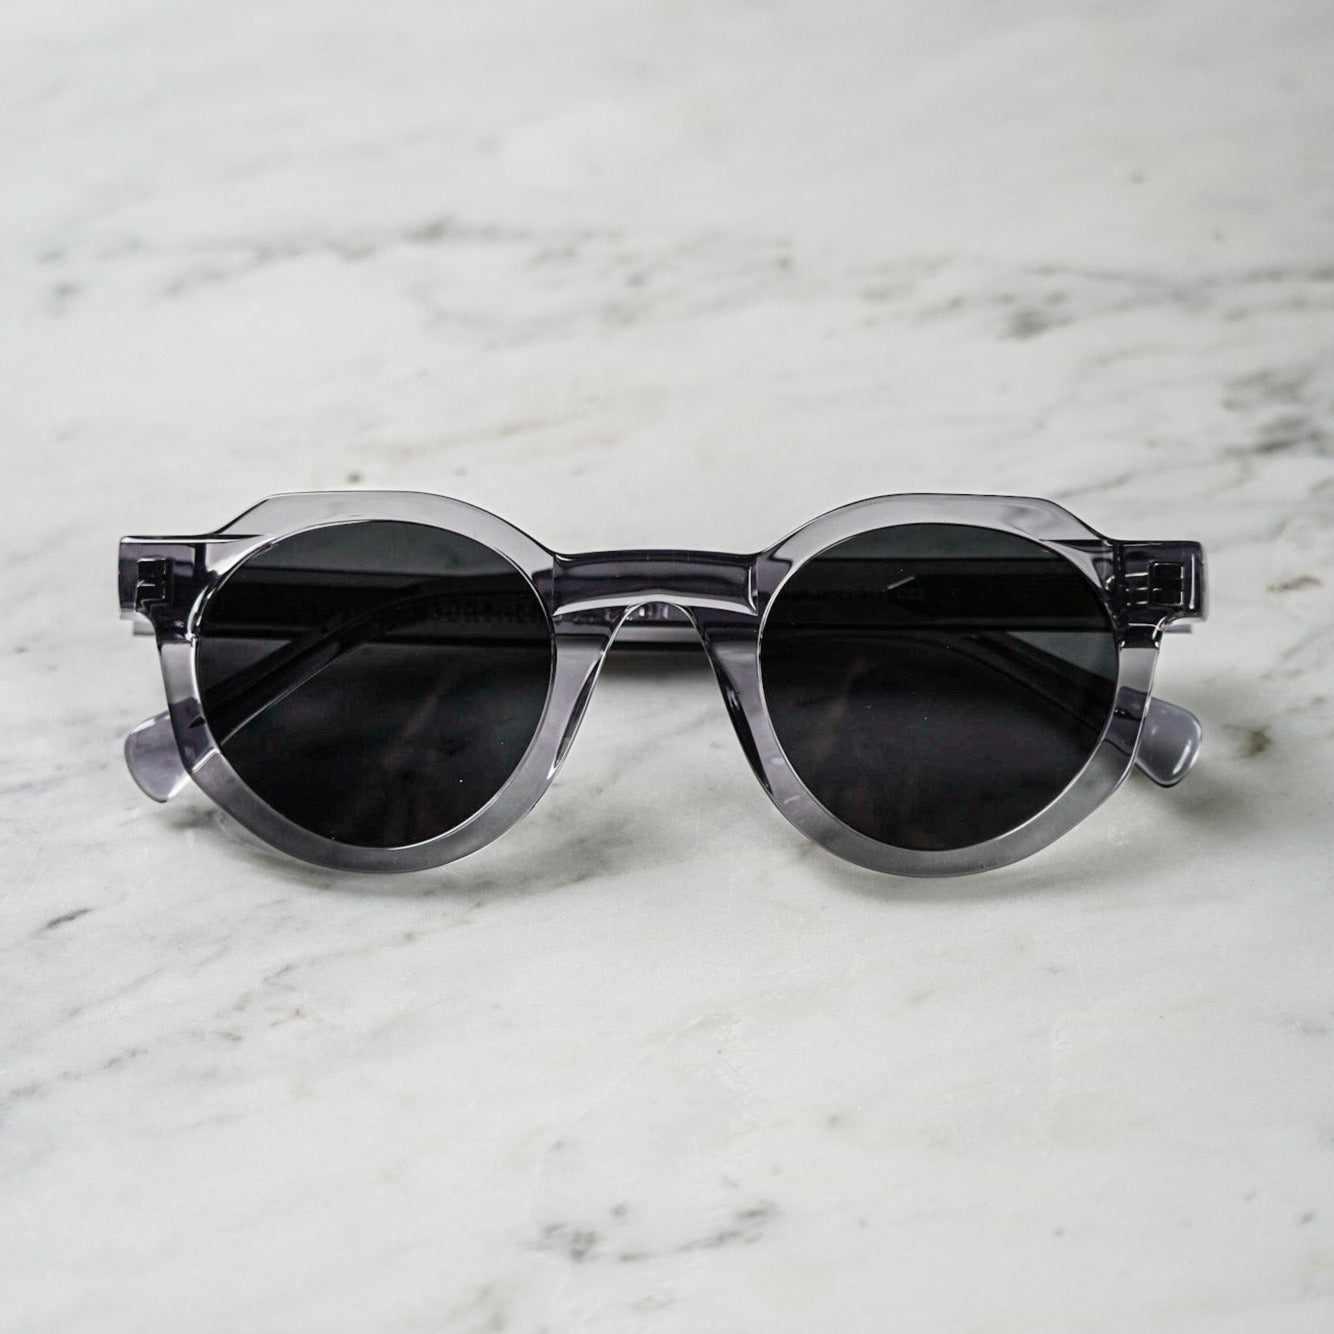 Signatursolglasögon - Transparent grey